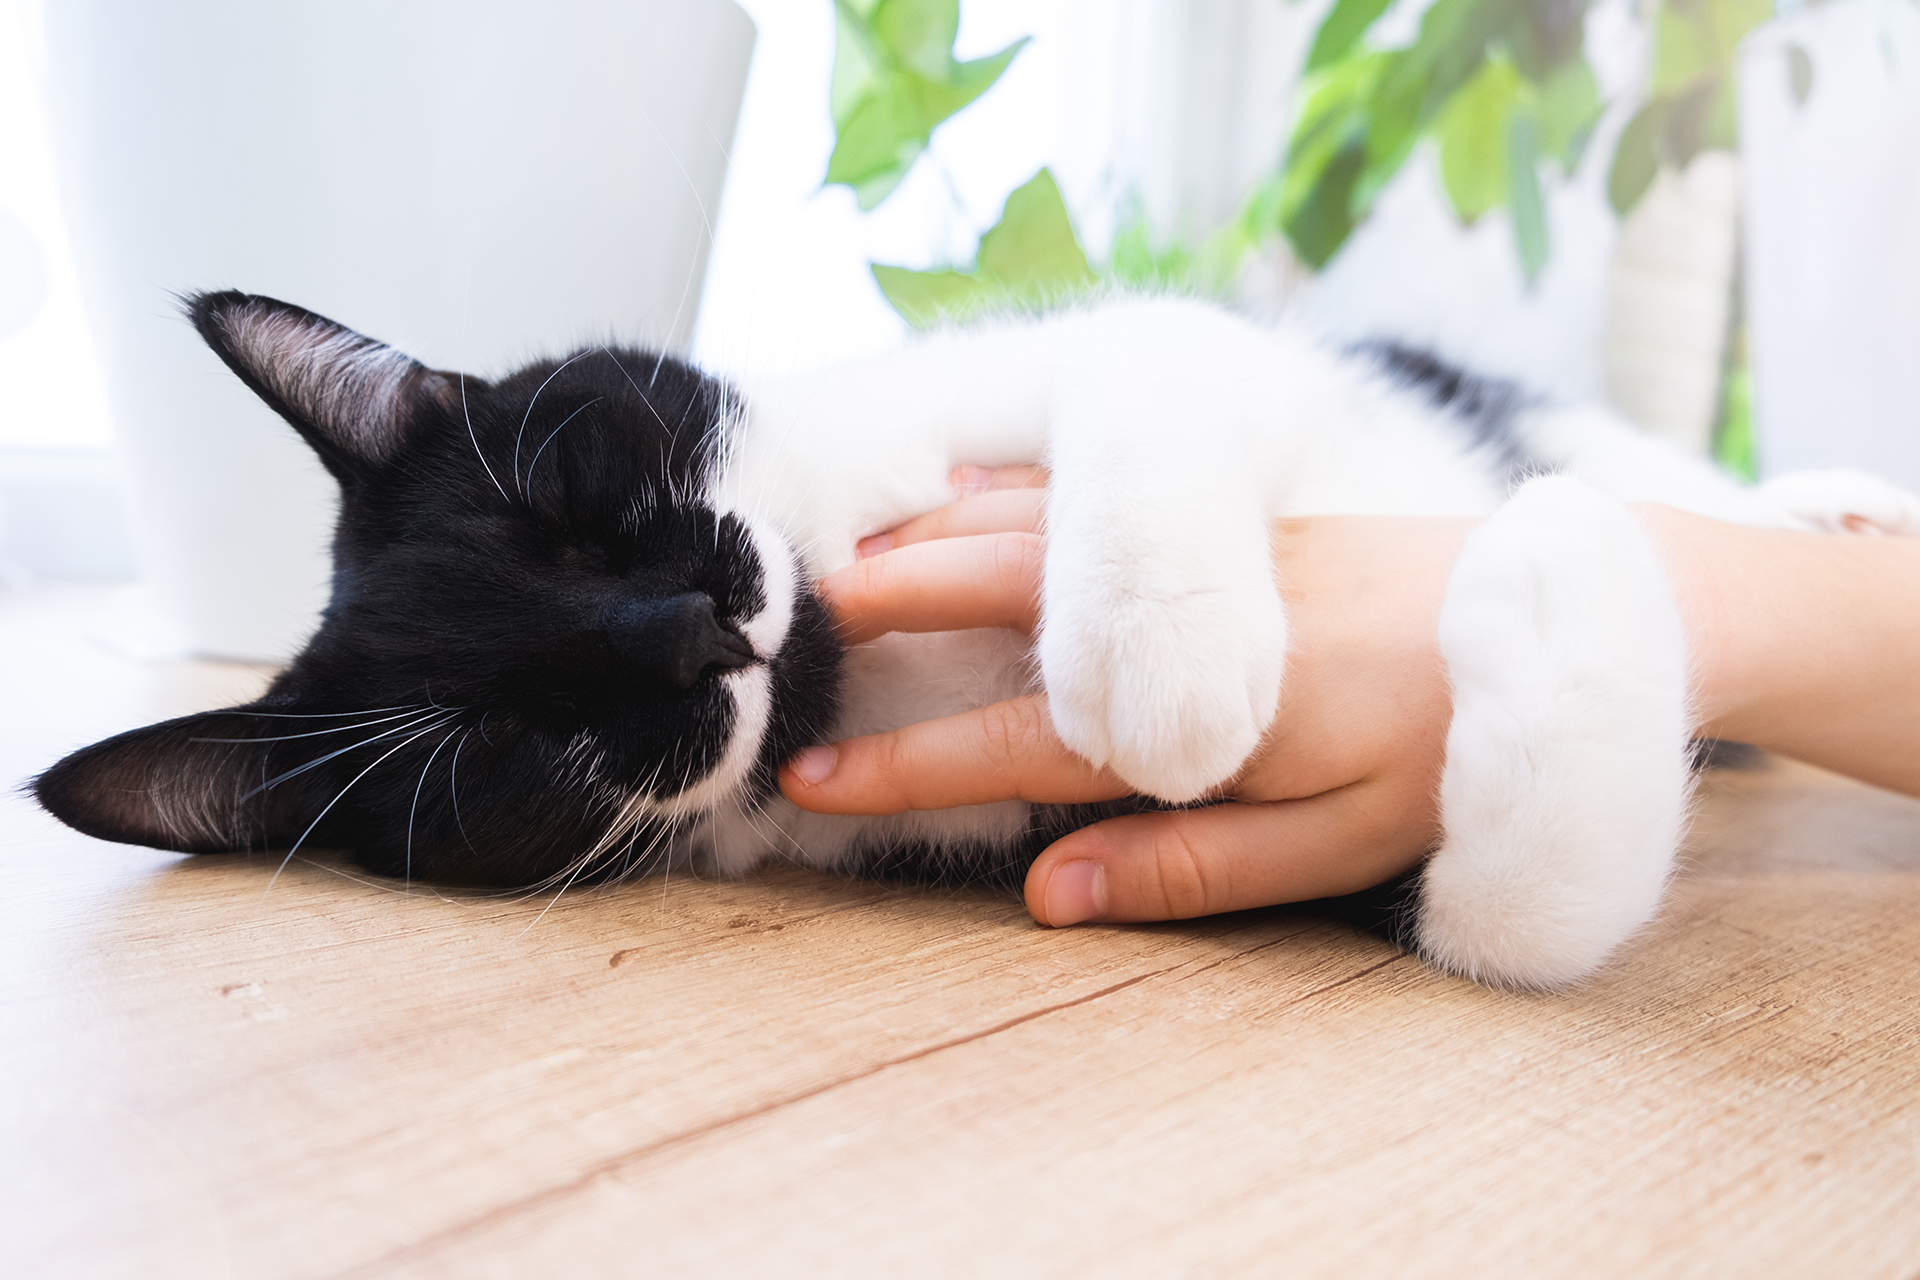 Black and white cat hugging child's hand.